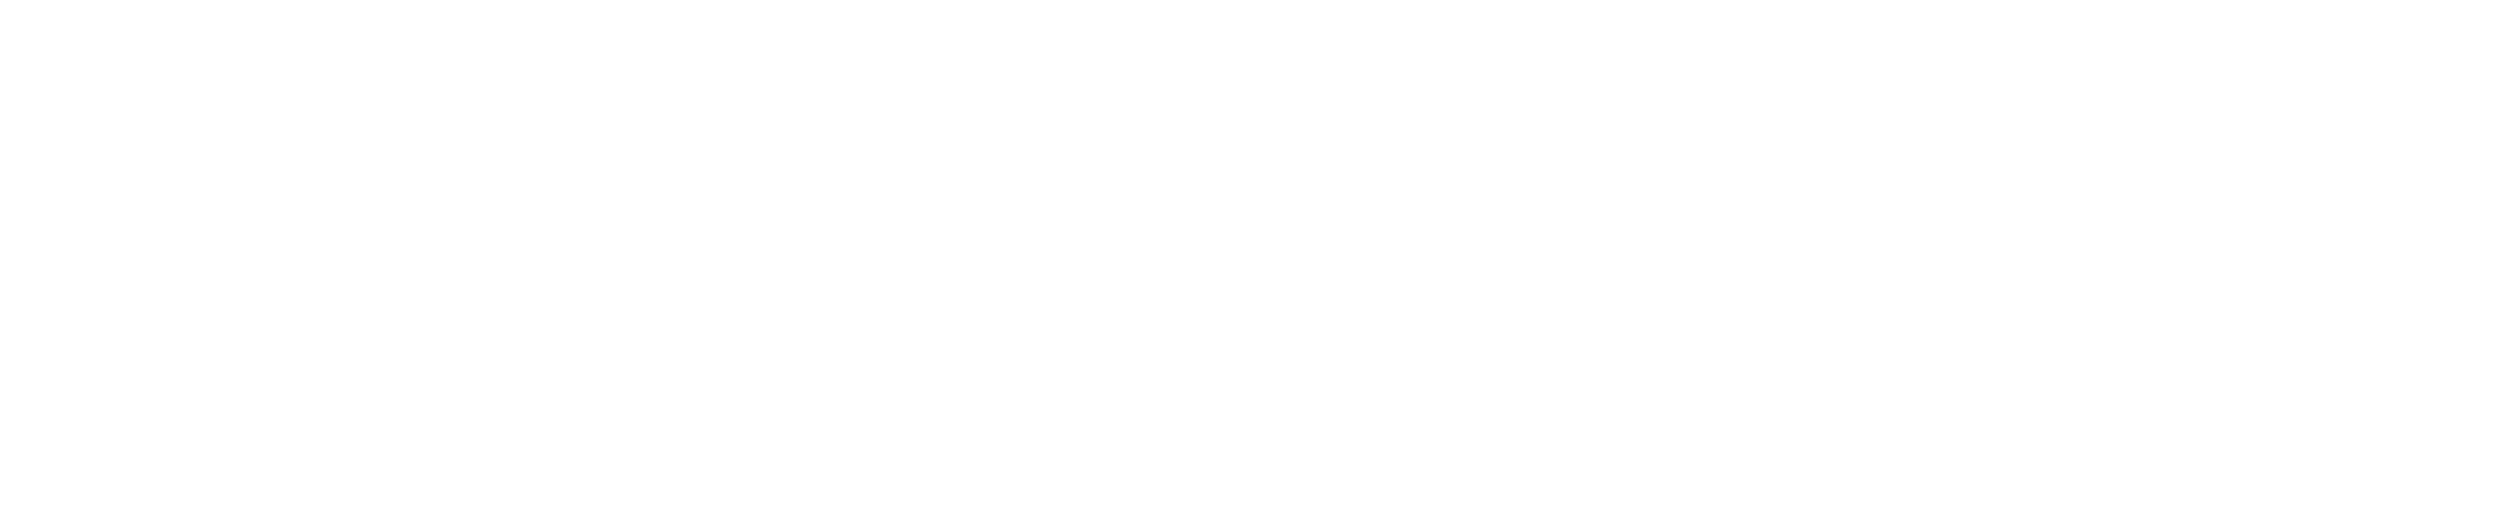 SoulFlow™ Embodiment